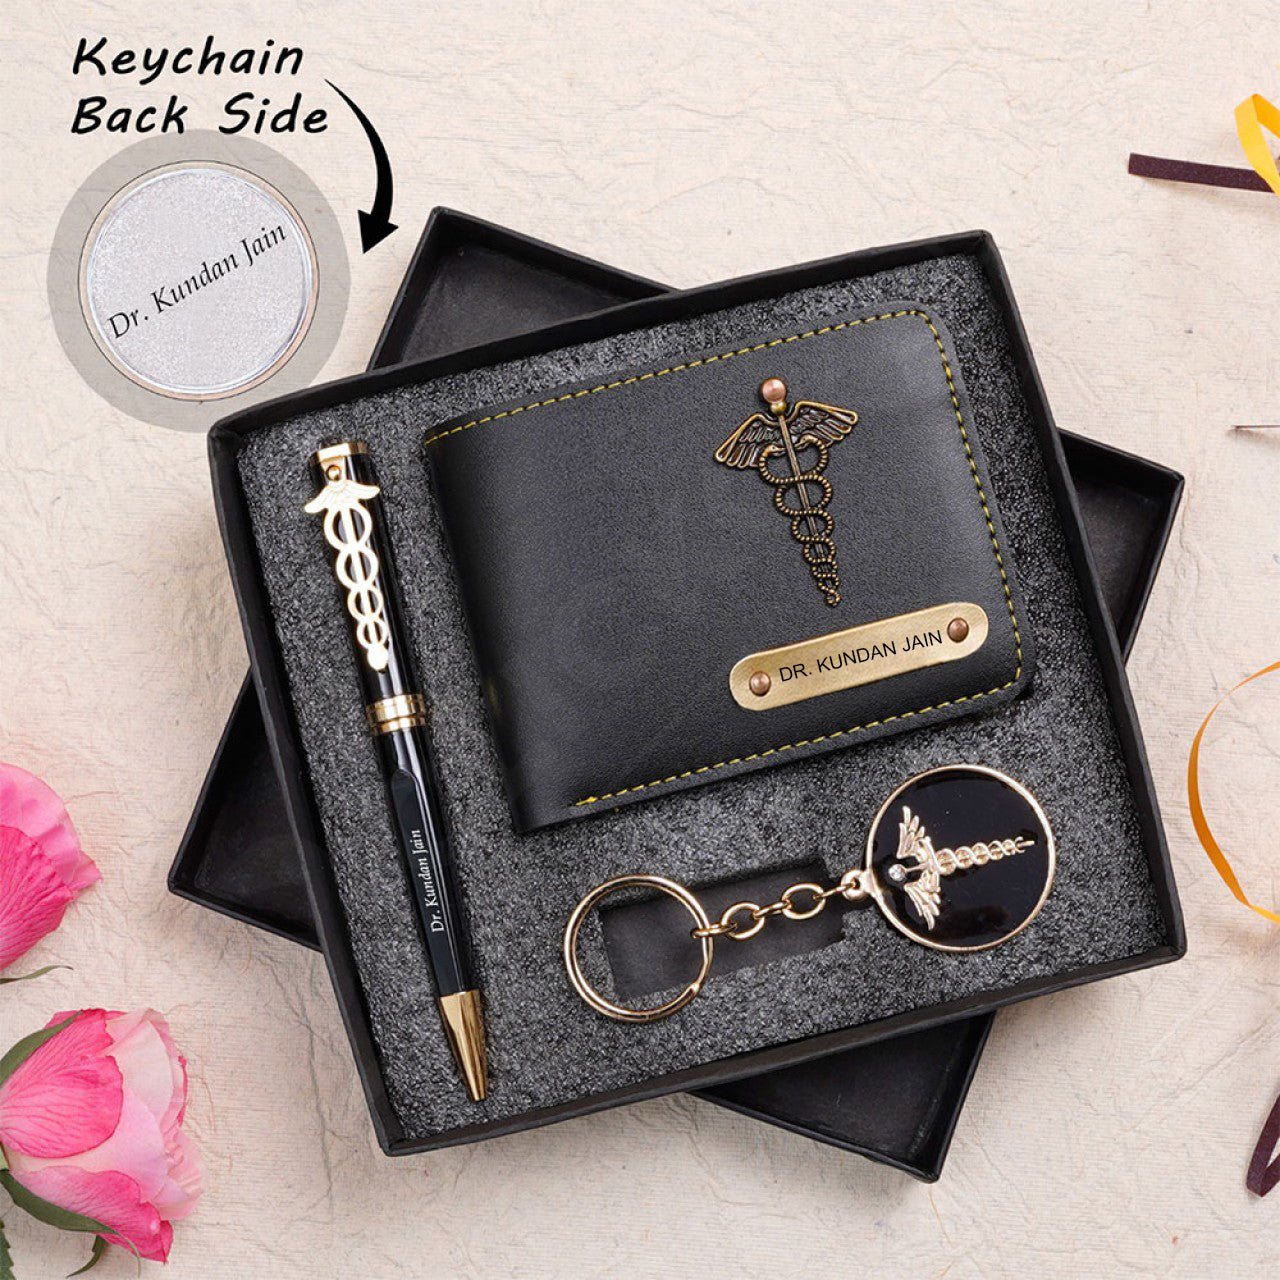 Personalized Wallet Pen & Key Chain Set For Doctors